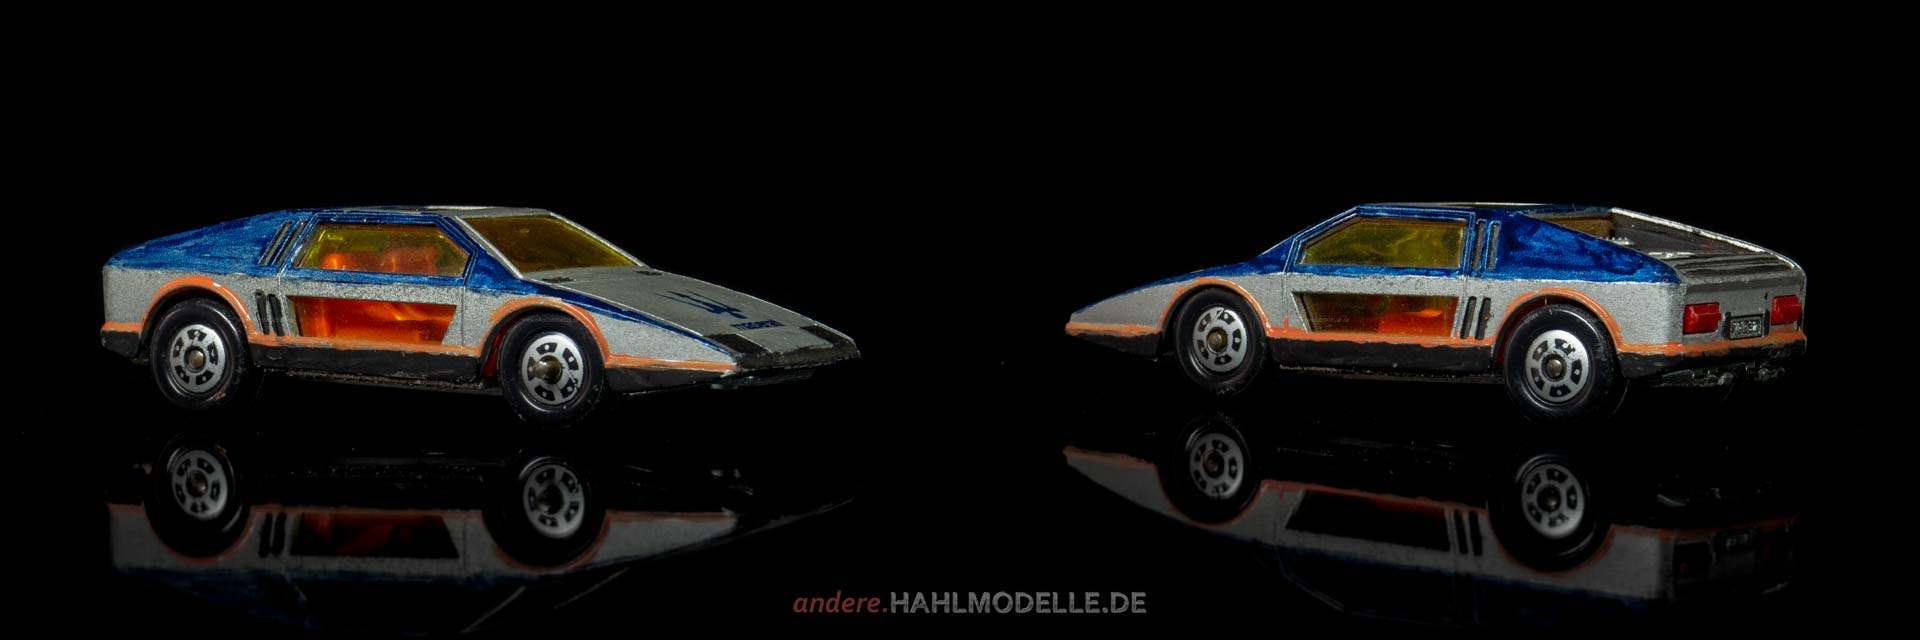 Maserati Boomerang | Coupé | Siku | 1:55 | www.andere.hahlmodelle.de